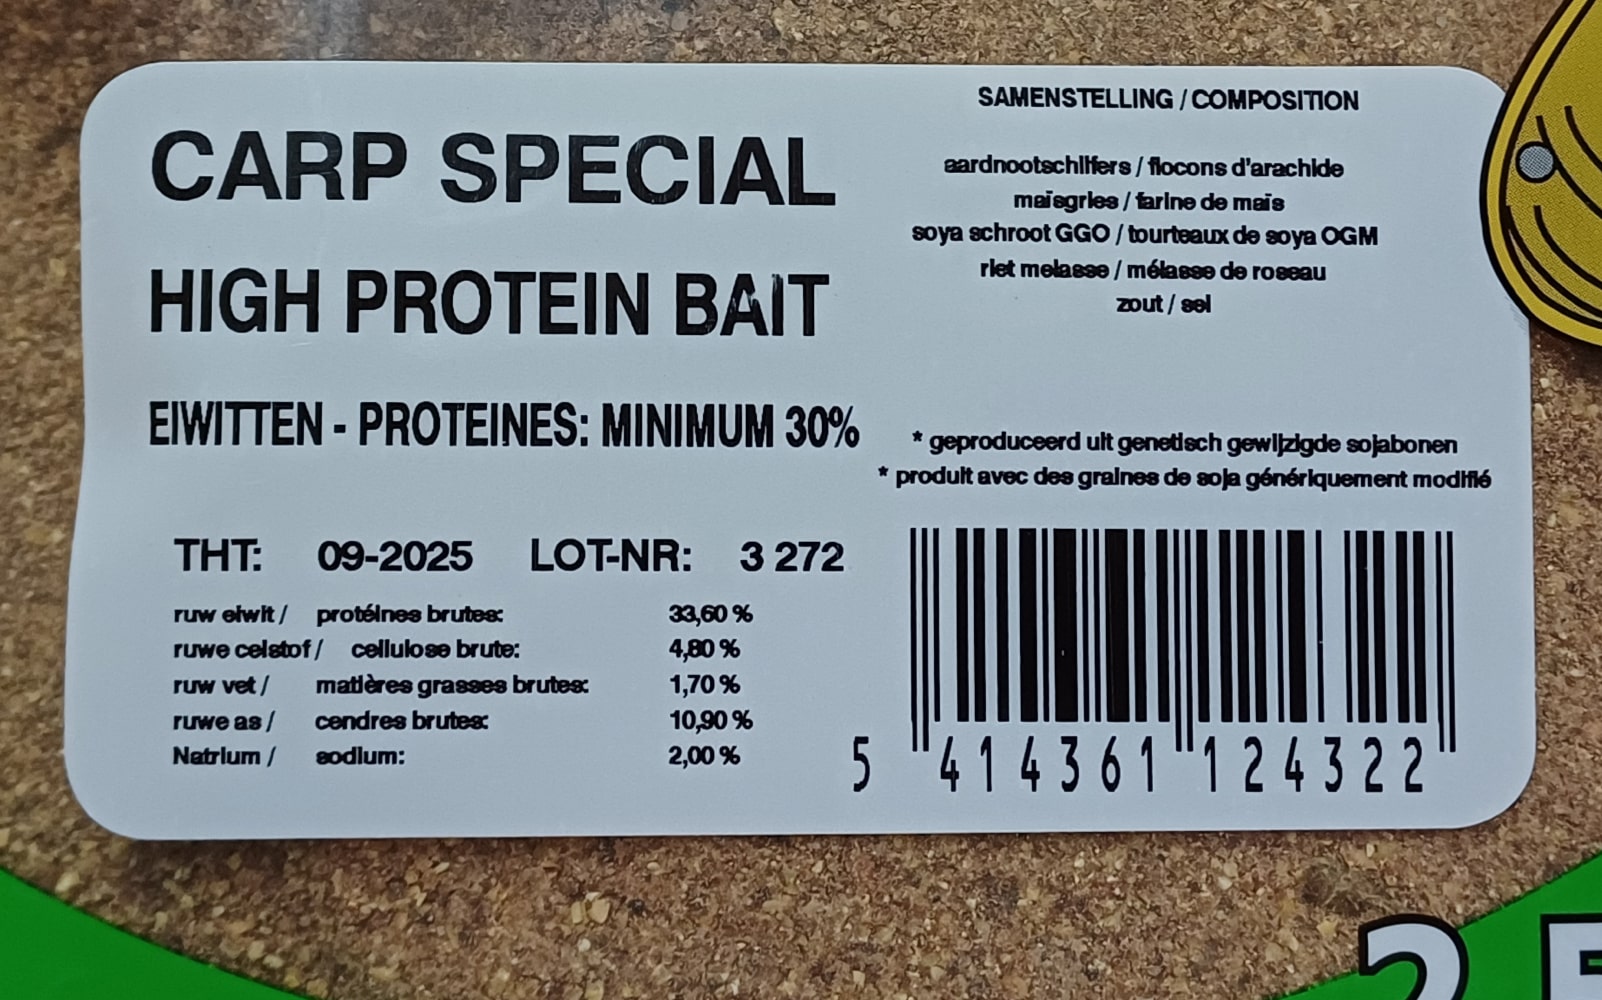 eurofish carp special high protein 2.5kg